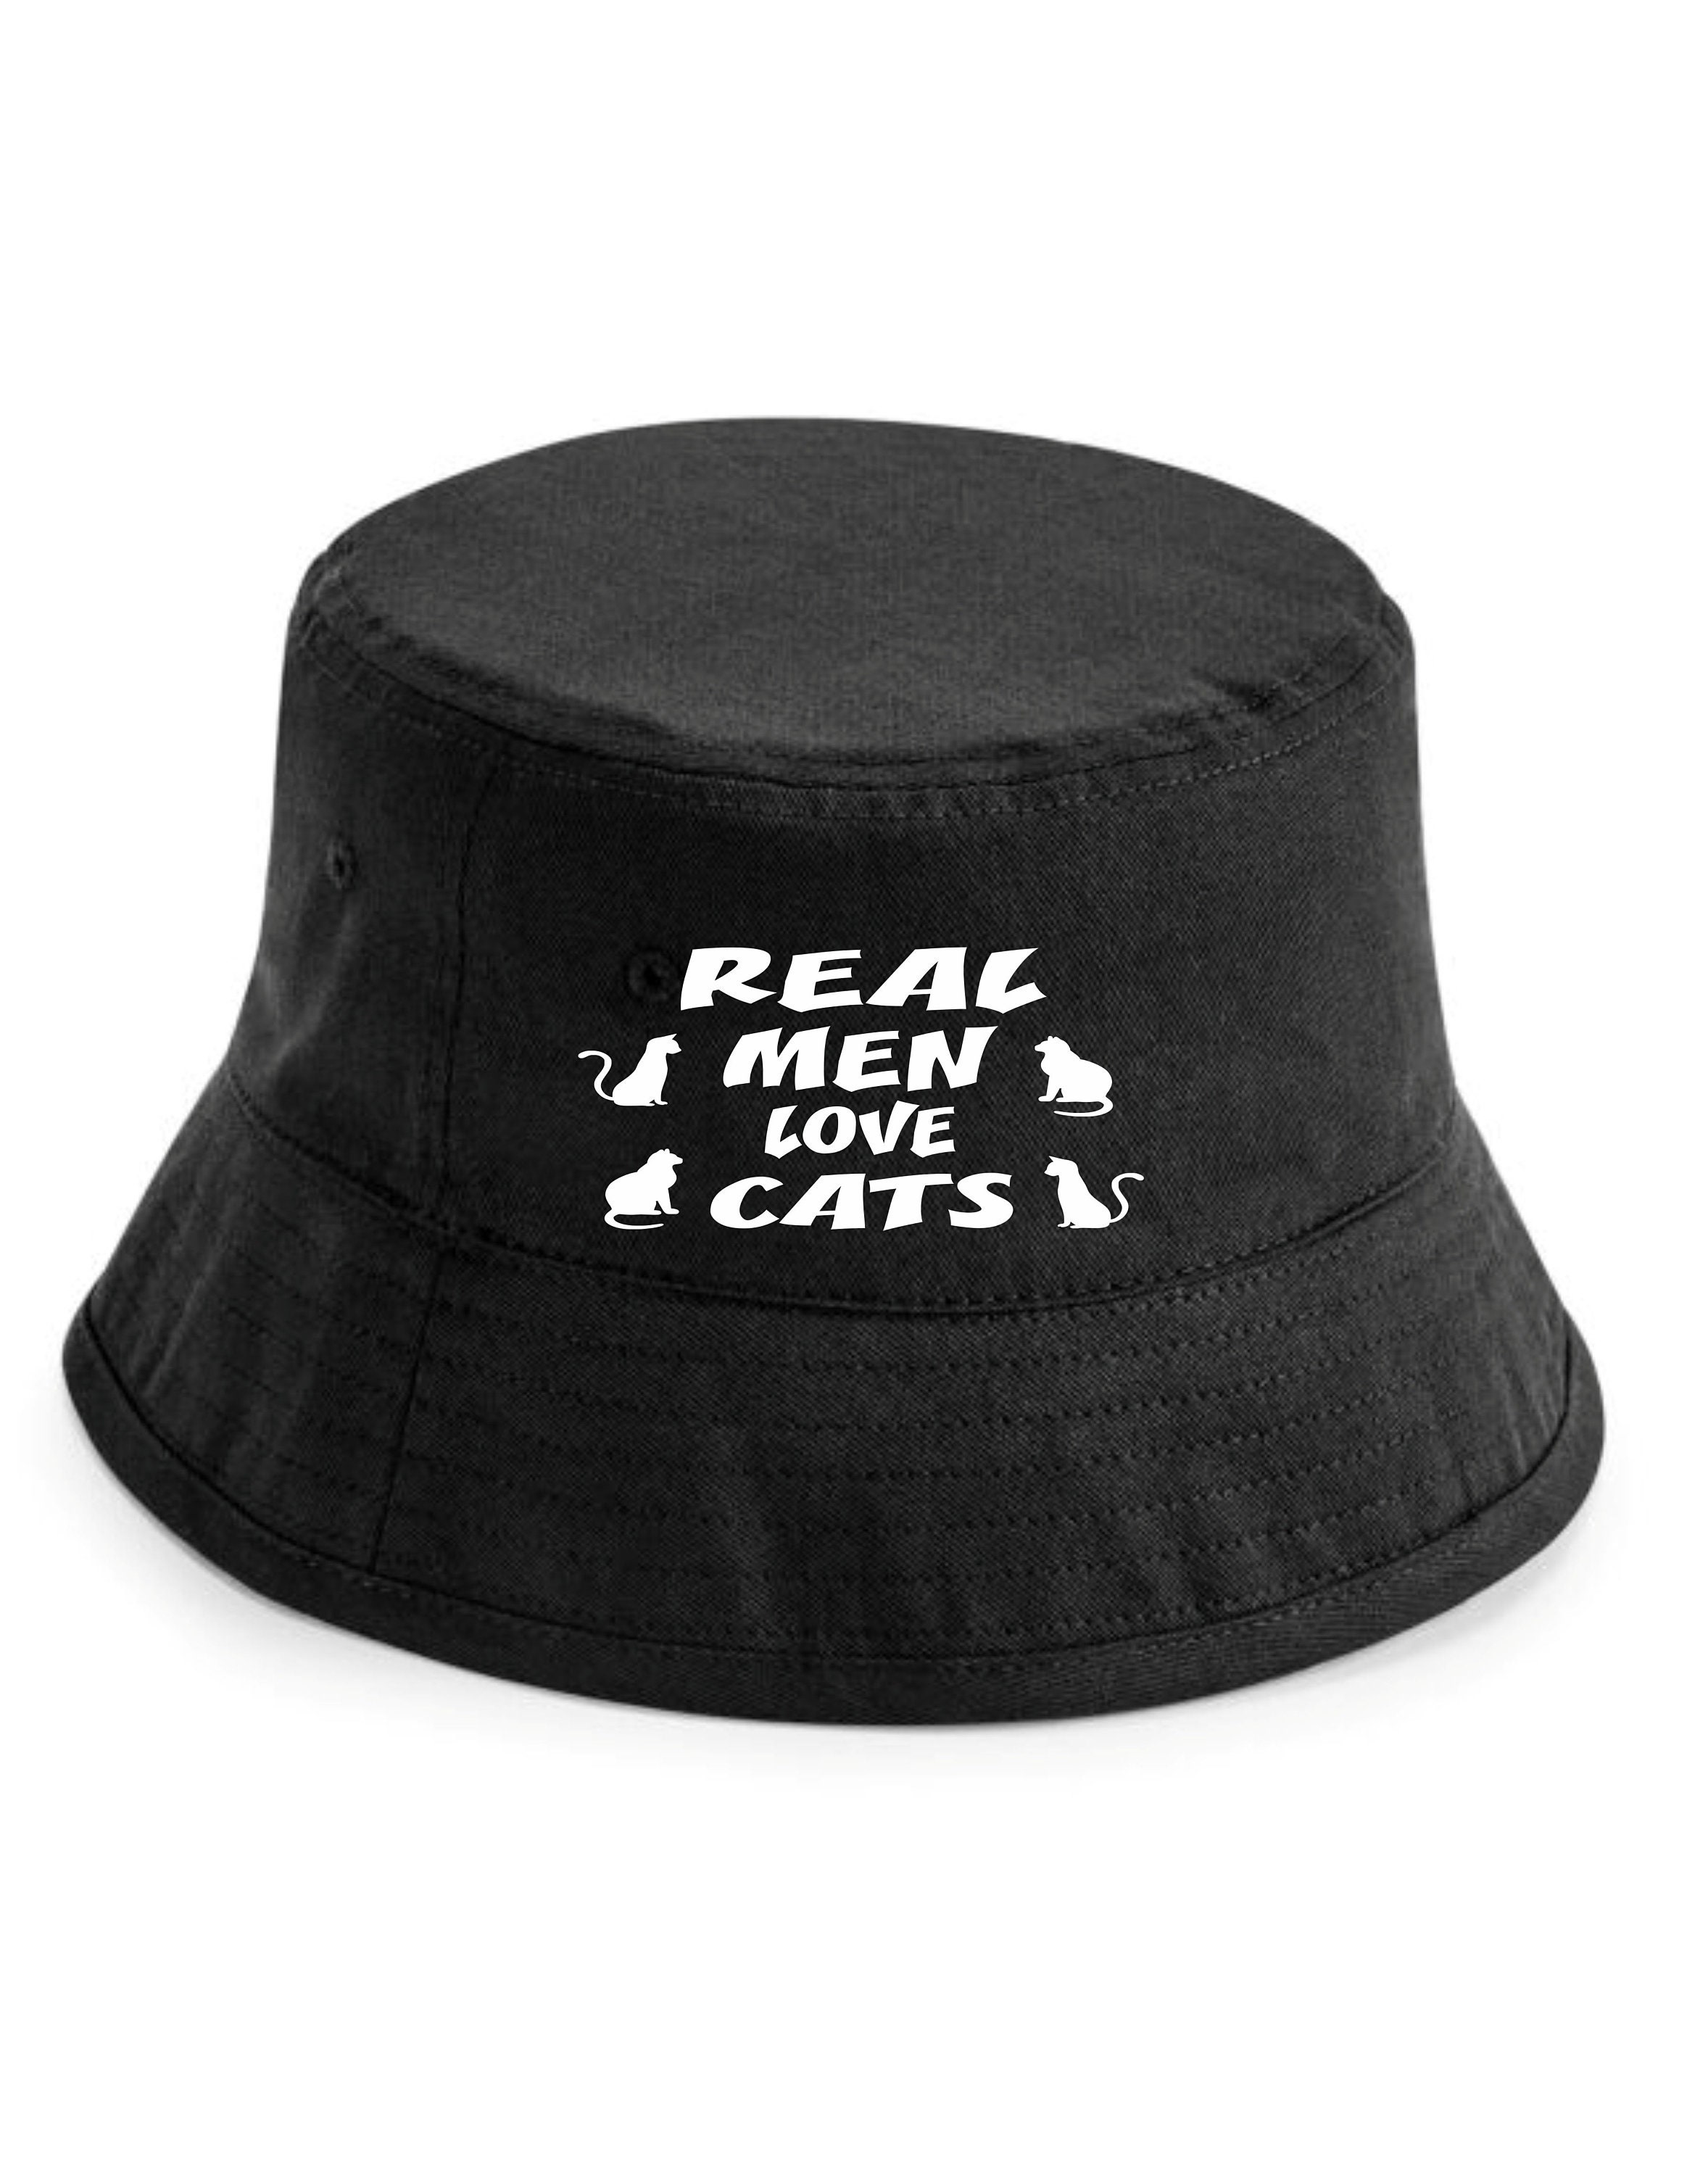 Print4u Real Men Love Cats Bucket Hat Funny Cat Lovers Gift for Men 